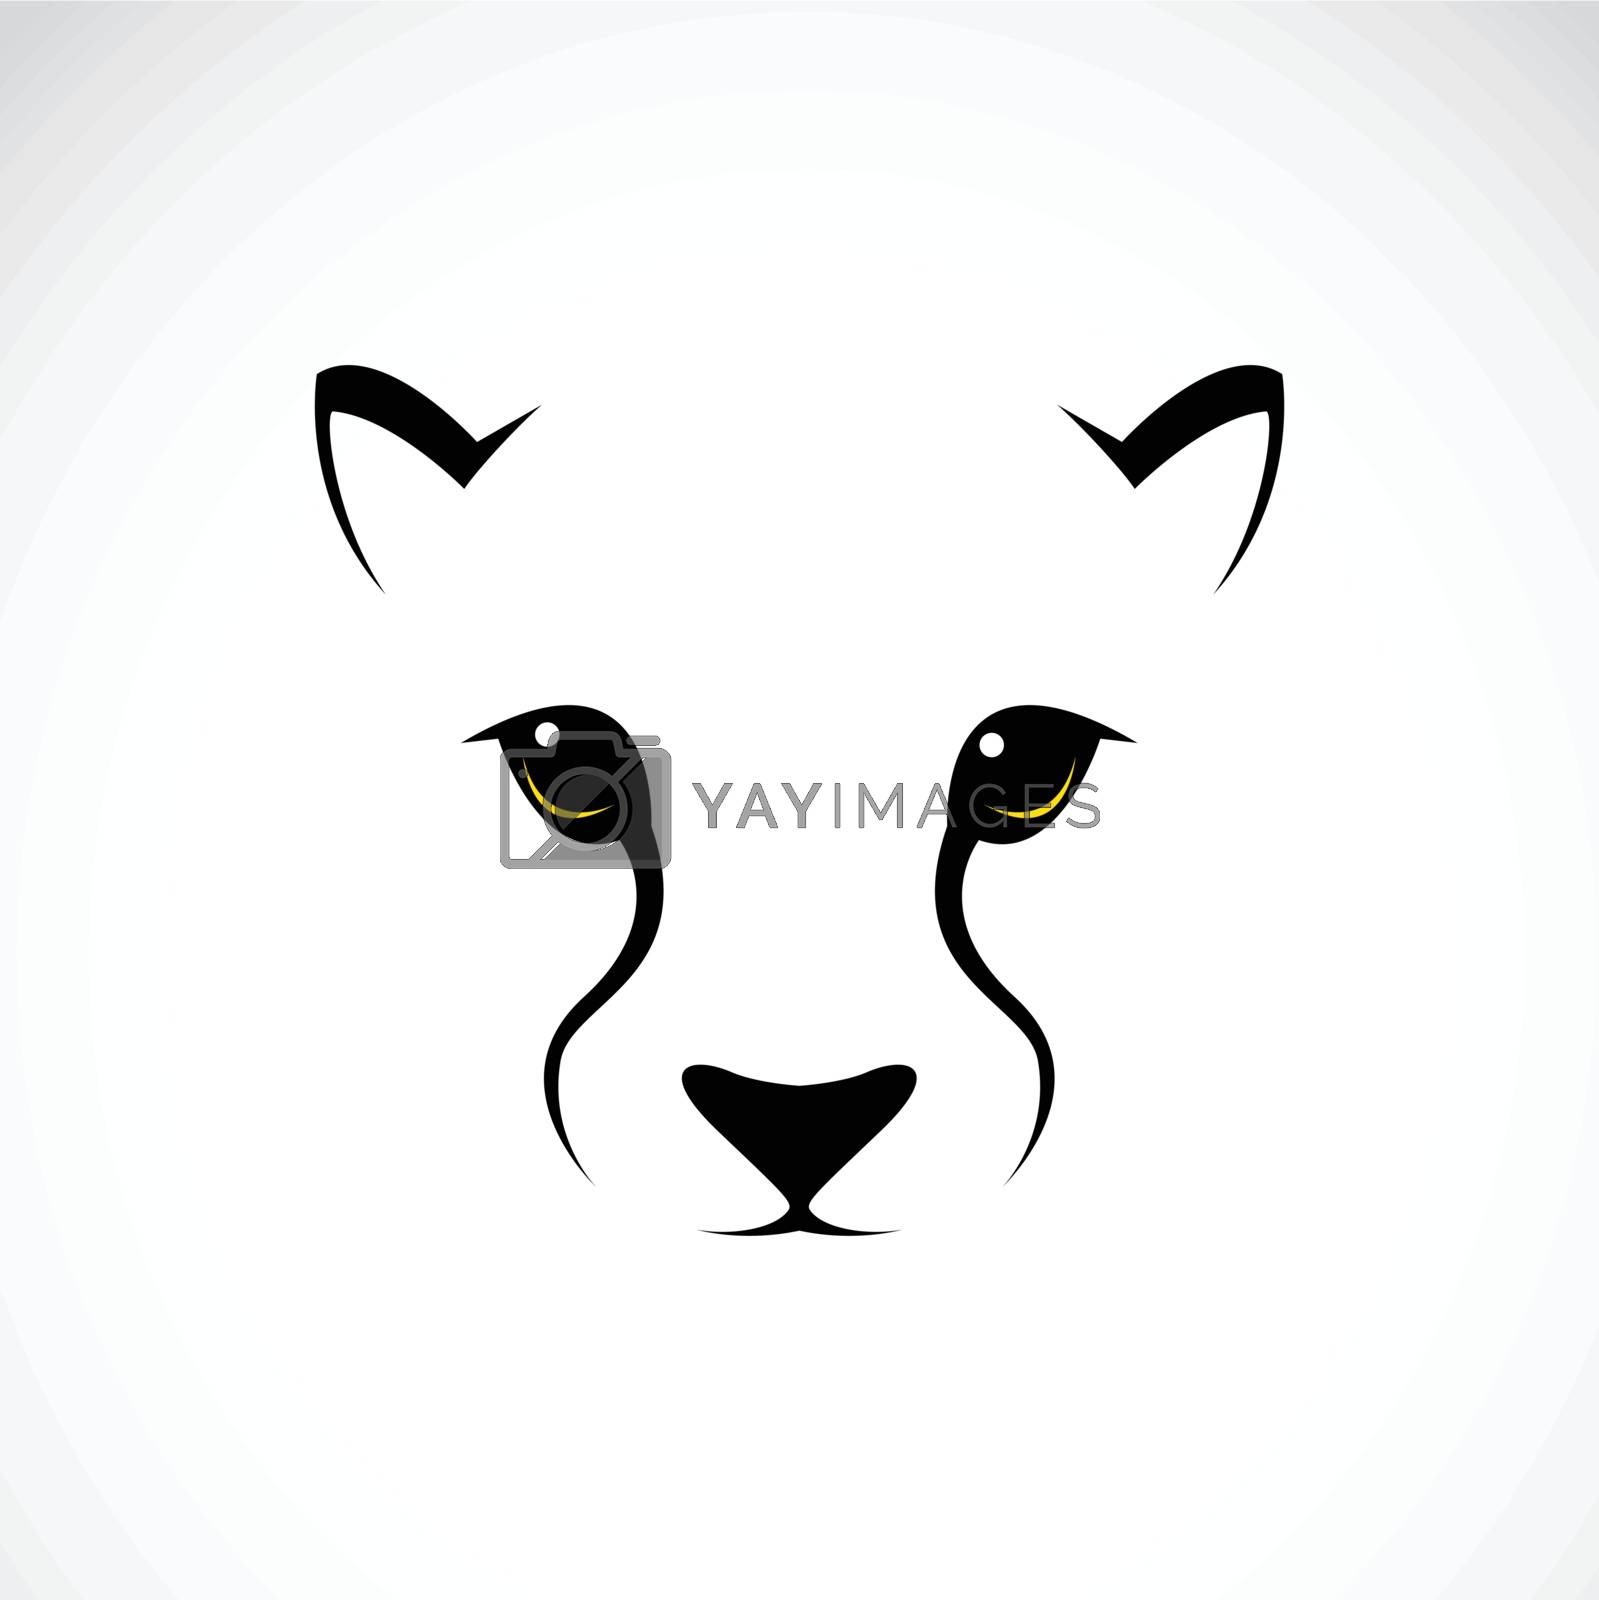 Royalty Free Vector | Vector image of an cheetah face by yod67